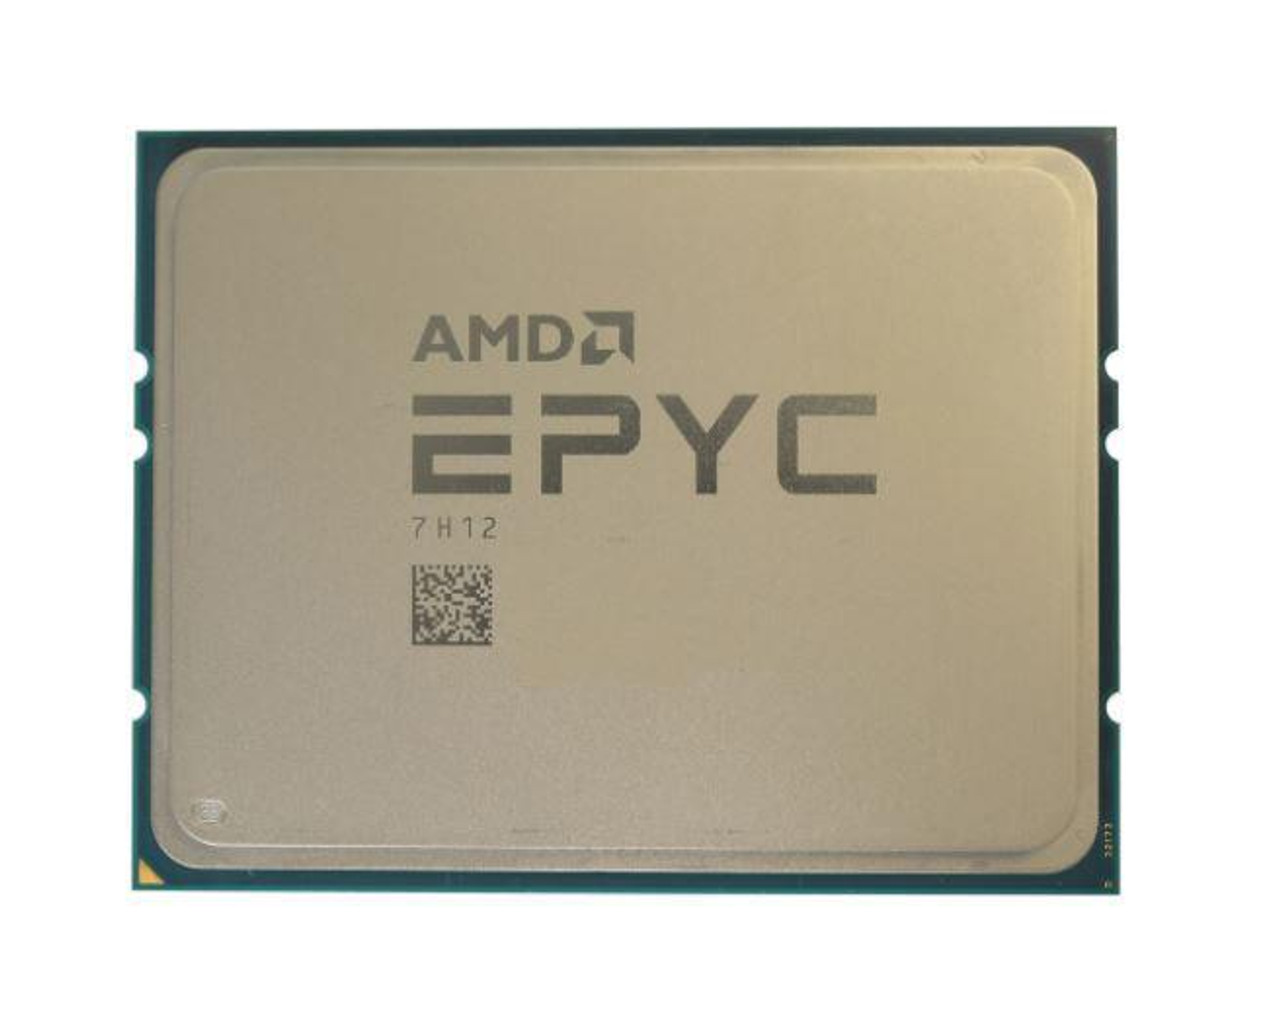 SuperMicro 2.60GHz 256MB L3 Cache Socket SP3 AMD EPYC 7H12 64-Core Processor Upgrade